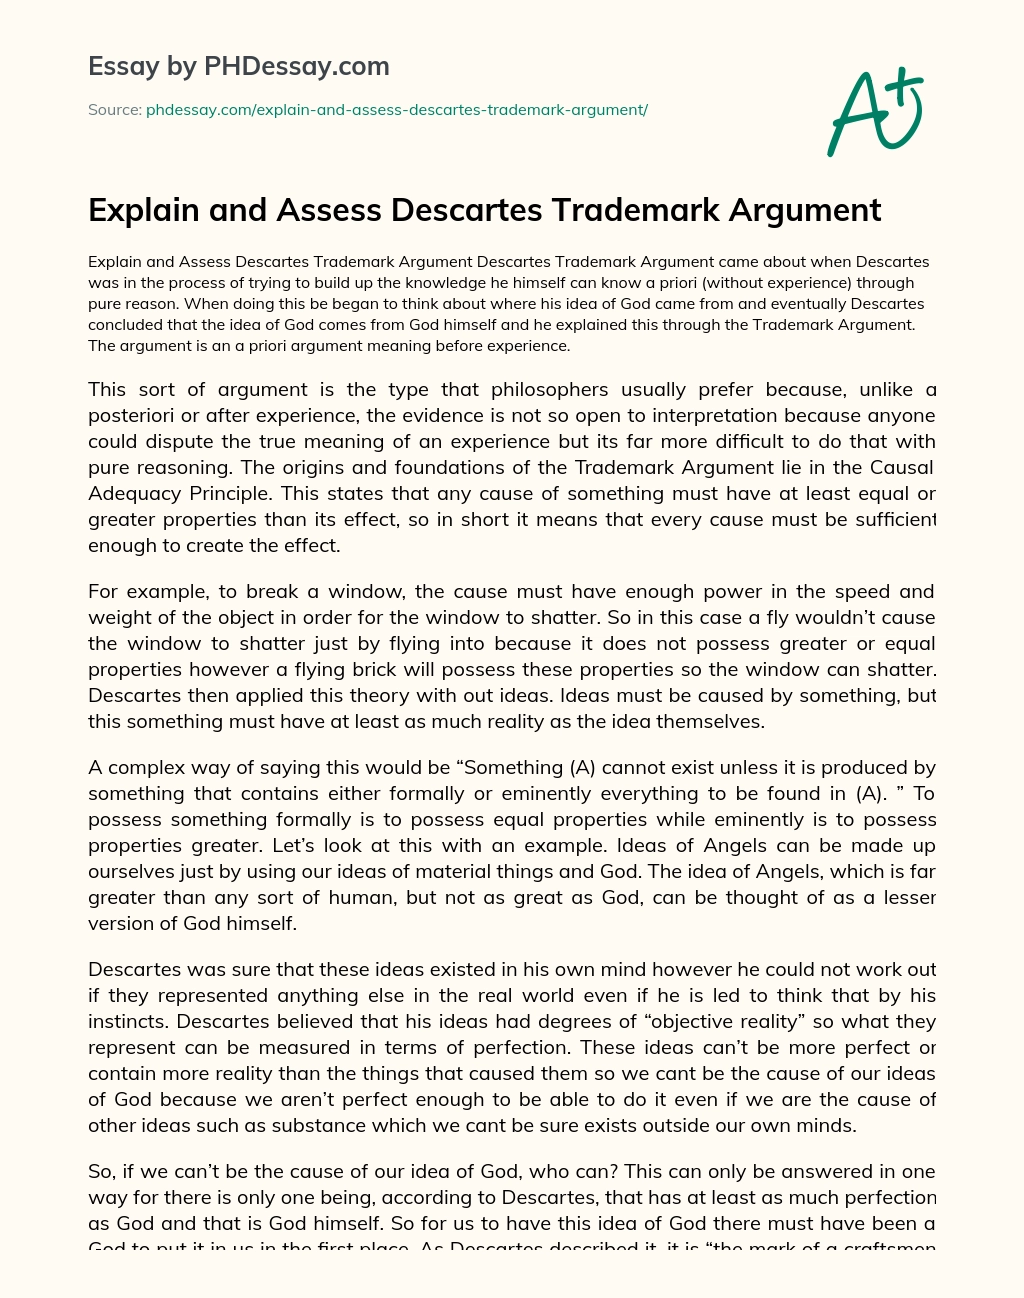 Explain and Assess Descartes Trademark Argument essay